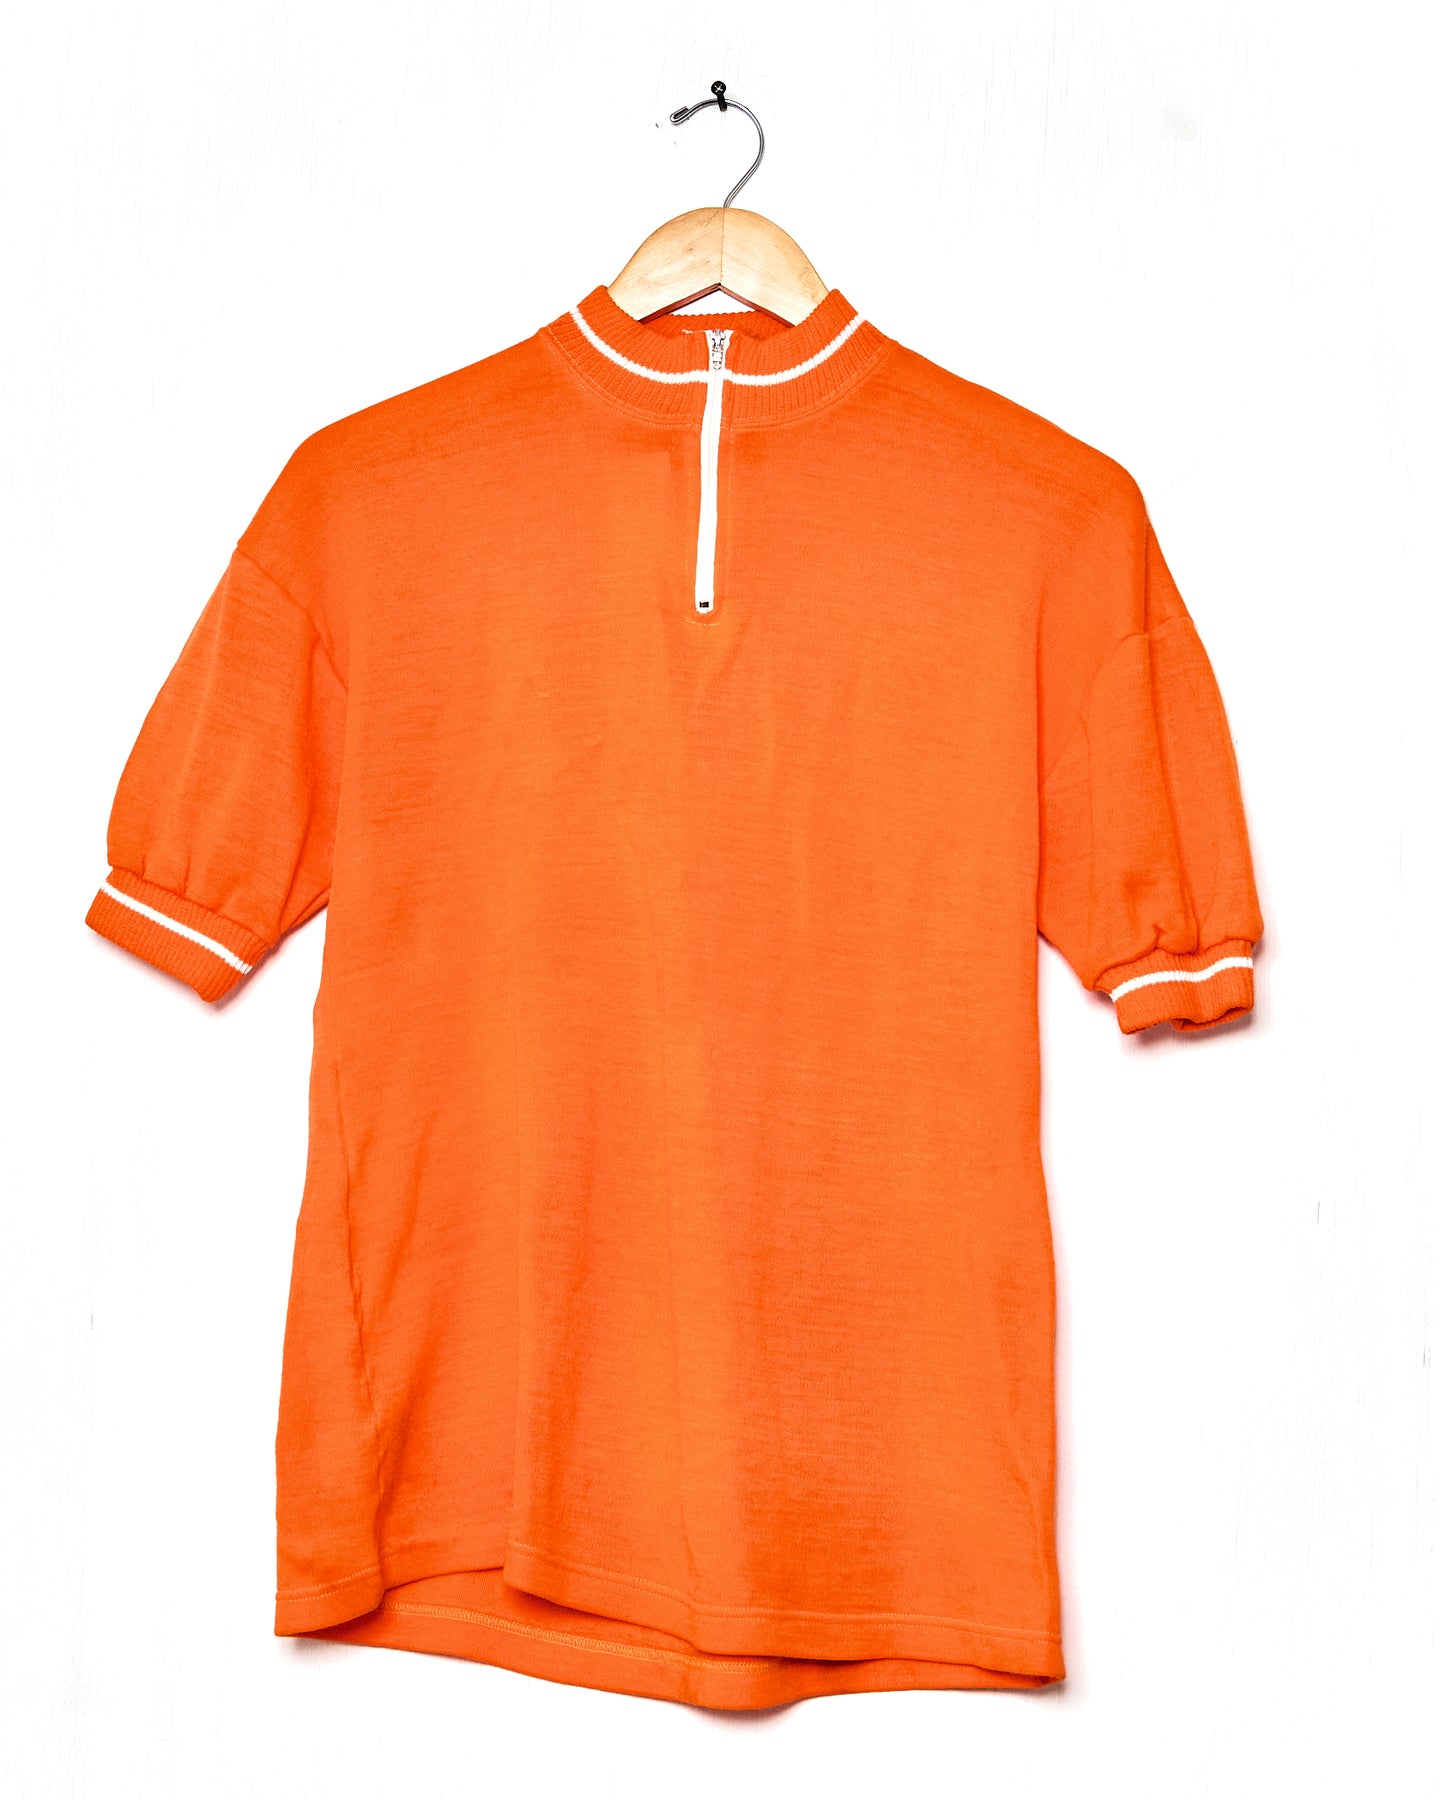 1970s Orange Cycling Top